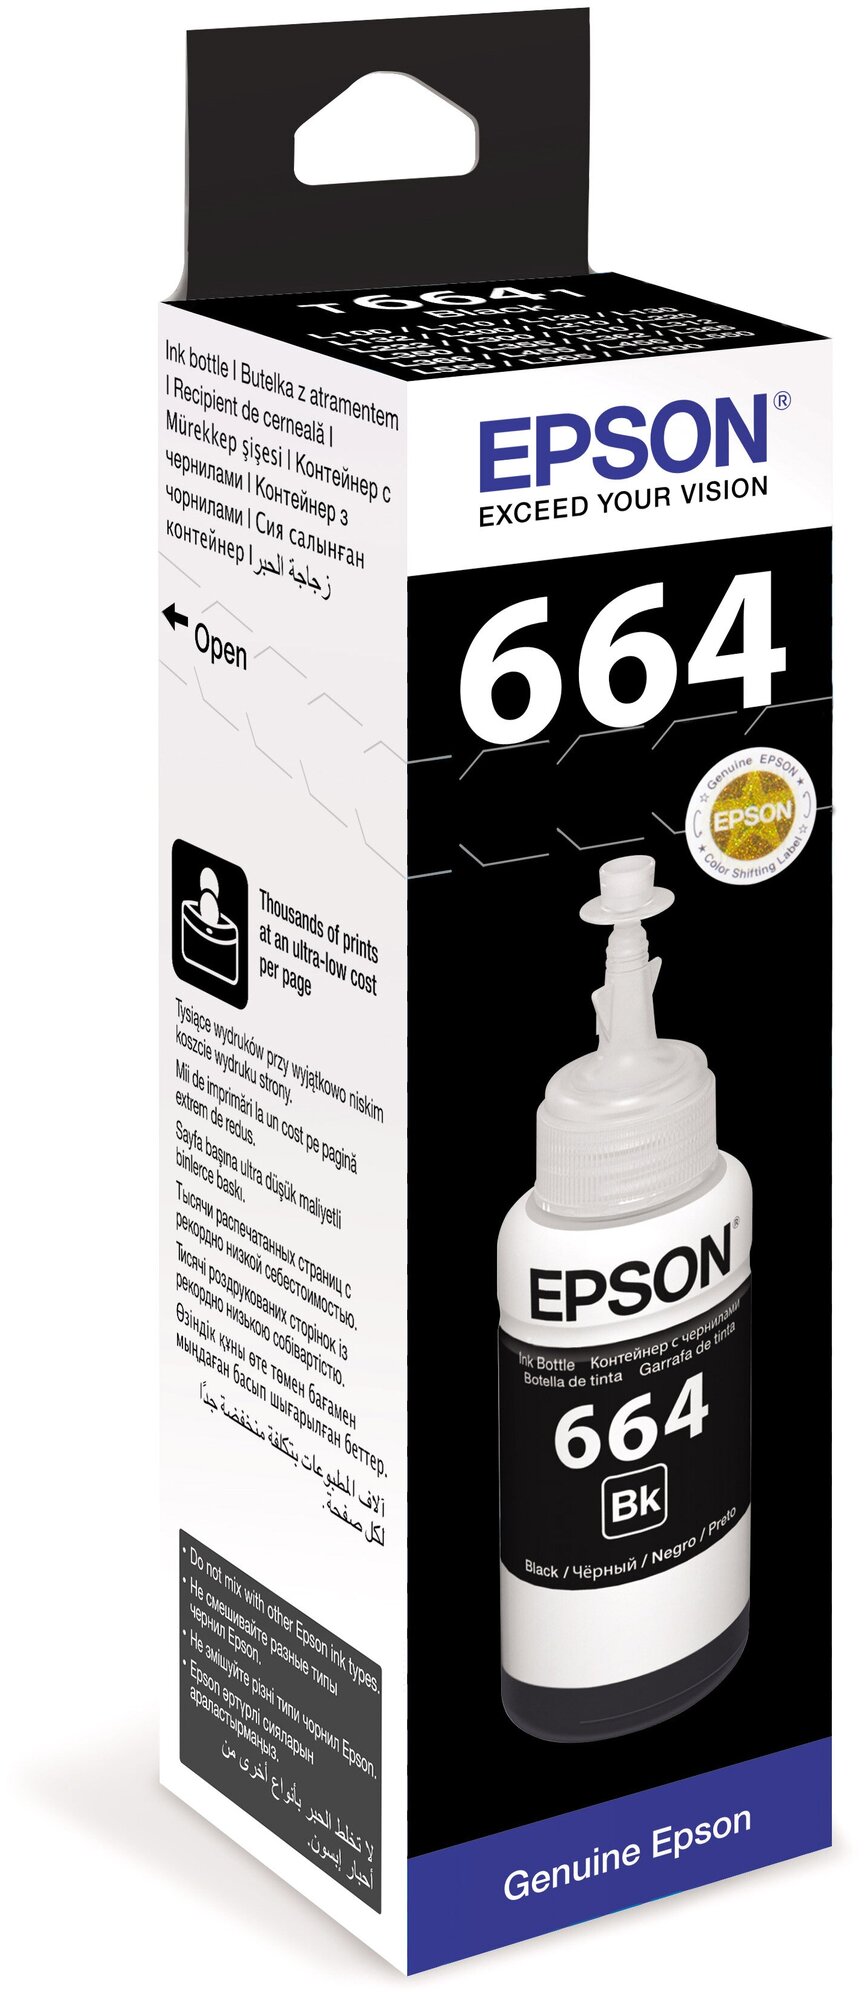 Чернила EPSON 664 (T6641) для СНПЧ Epson L100/L110/L200/L210/L300/L456/L550, черные, оригинальные, C13T66414A/198